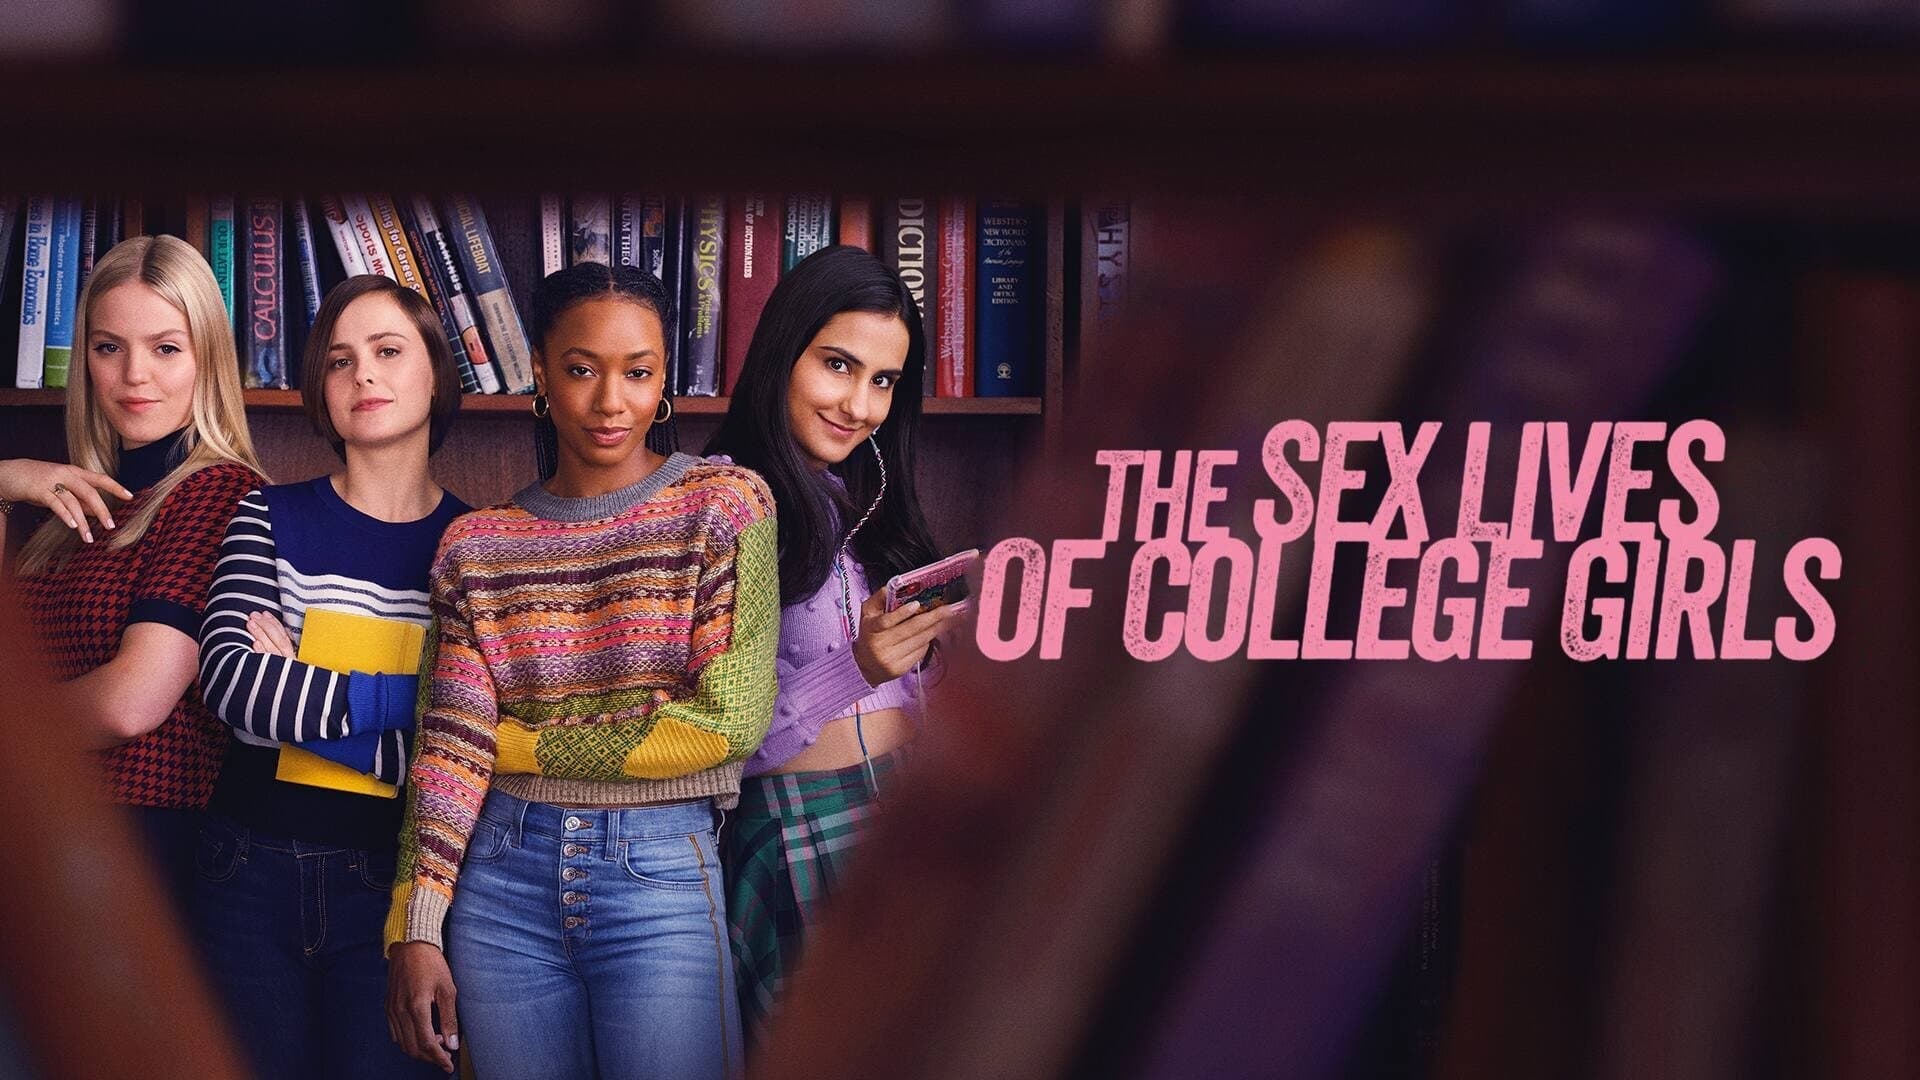 La vida sexual de las universitarias